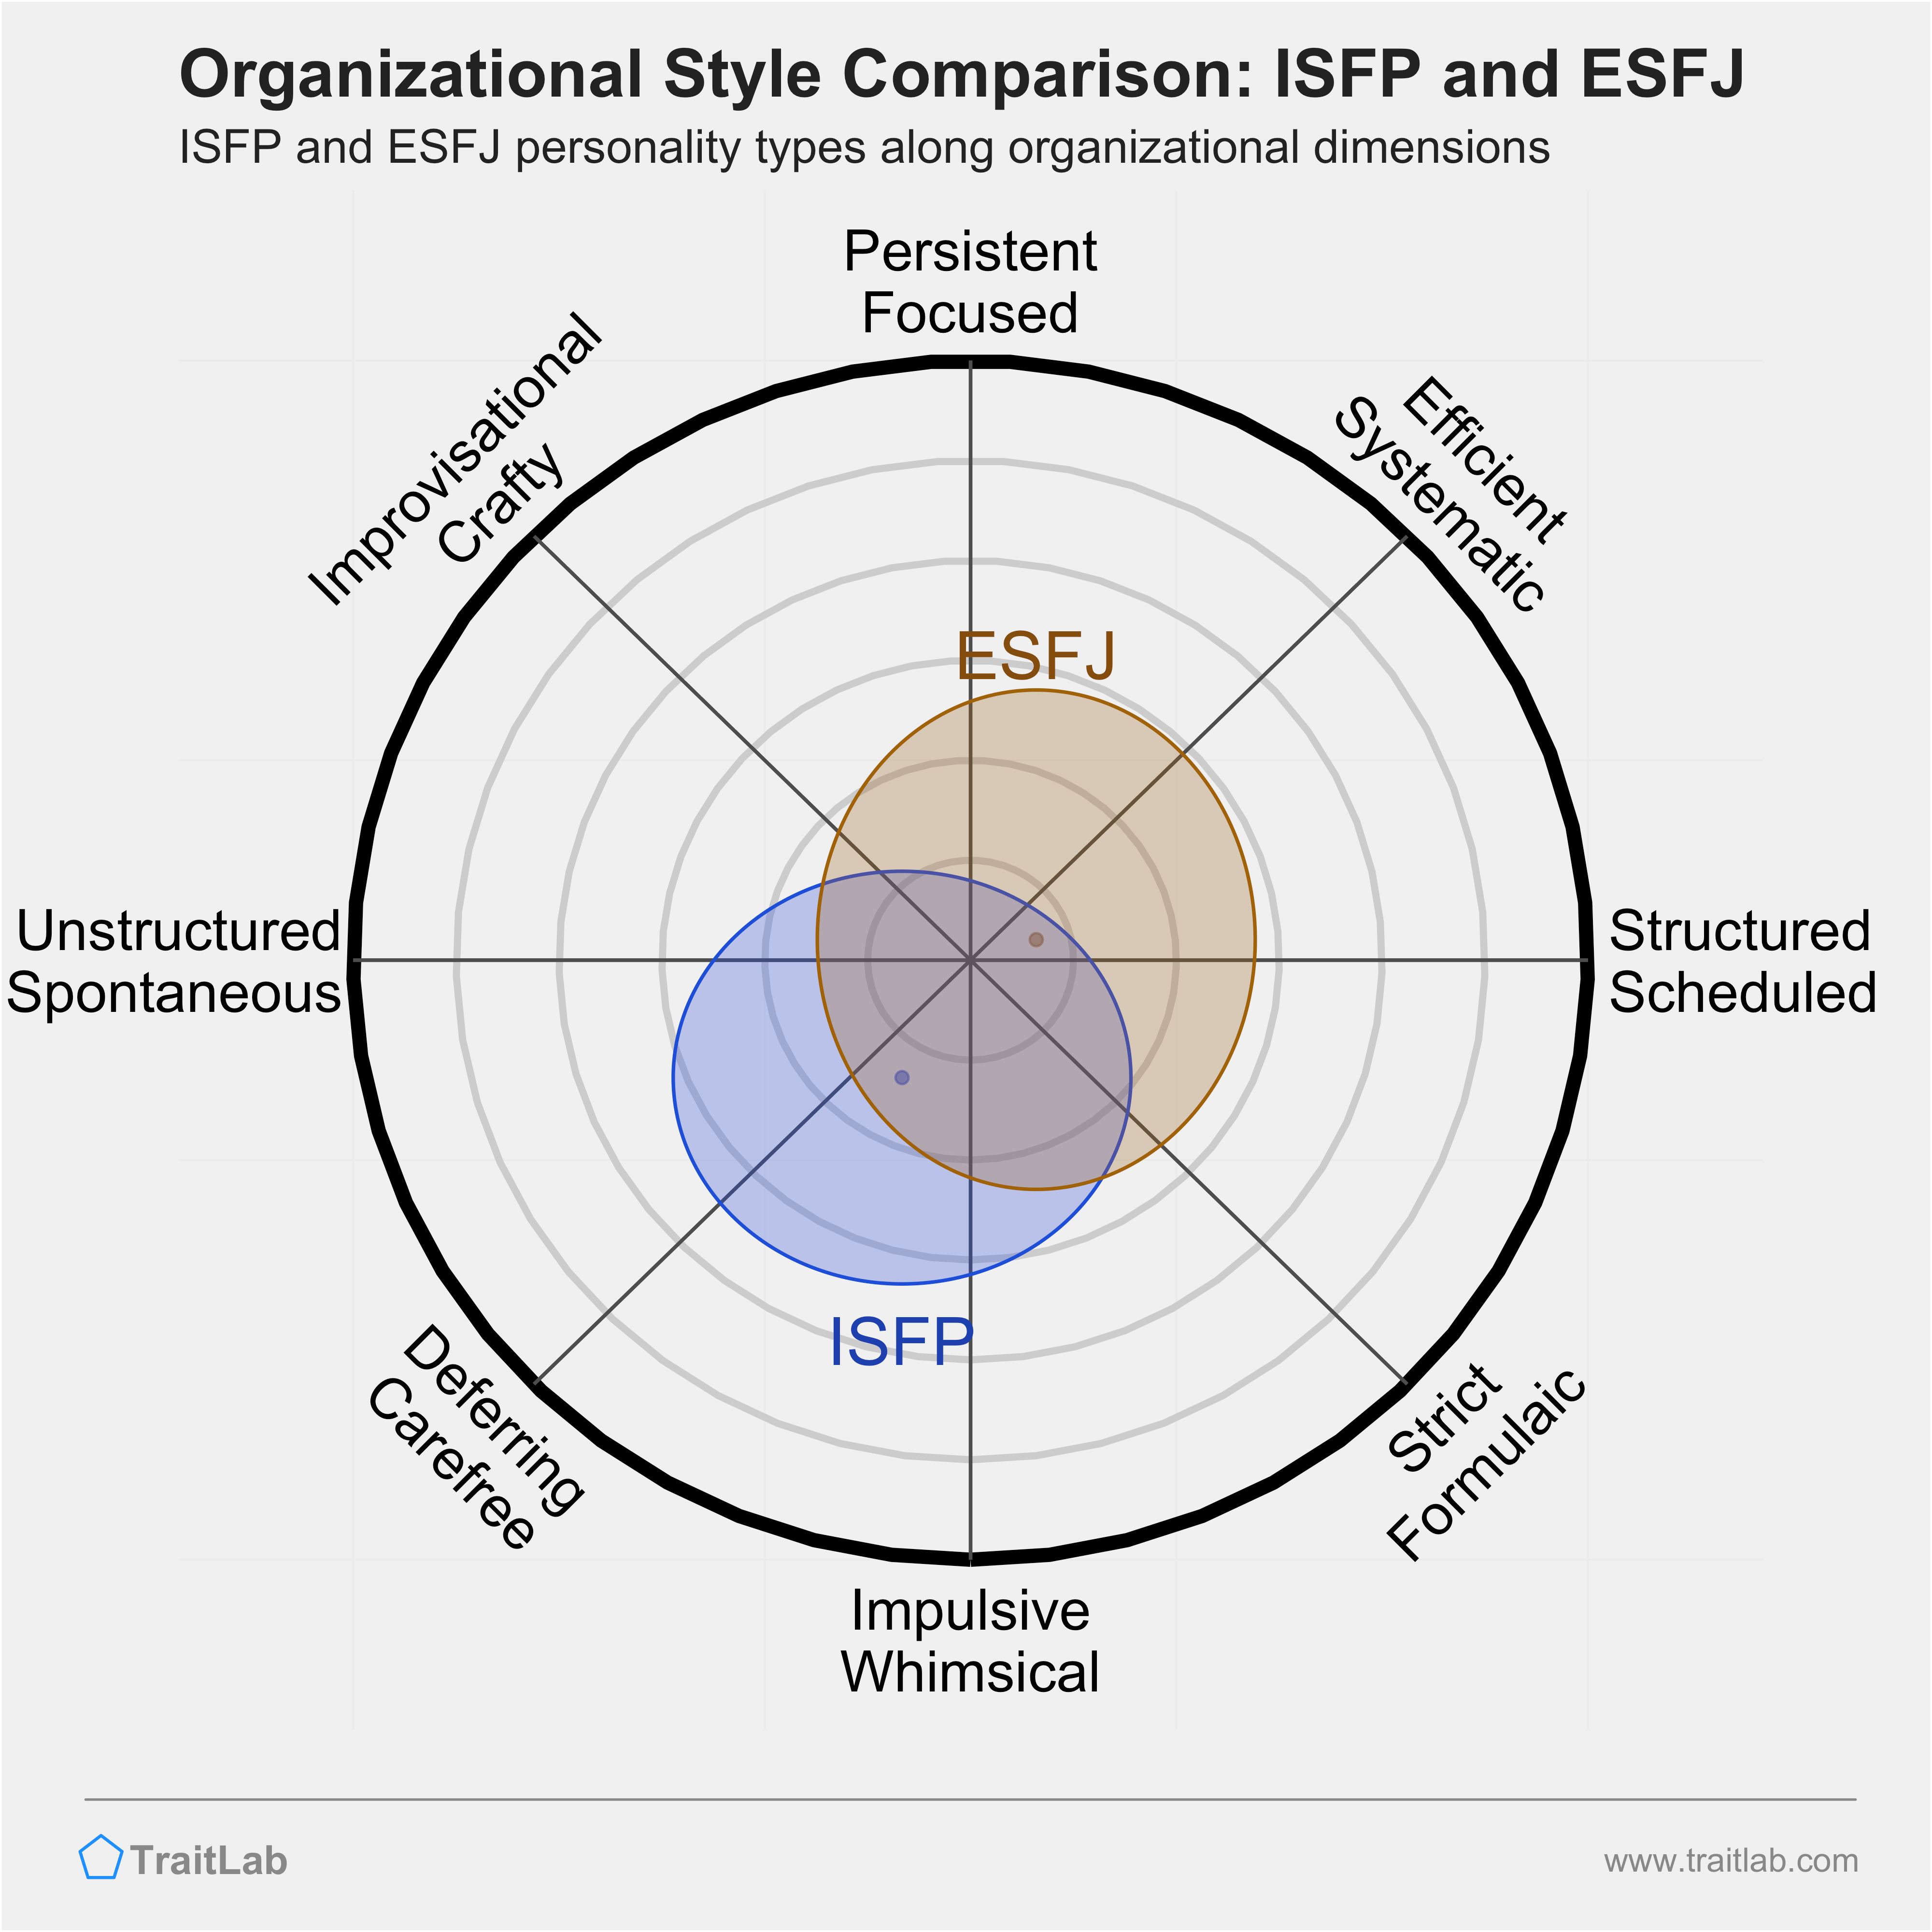 ISFP and ESFJ comparison across organizational dimensions